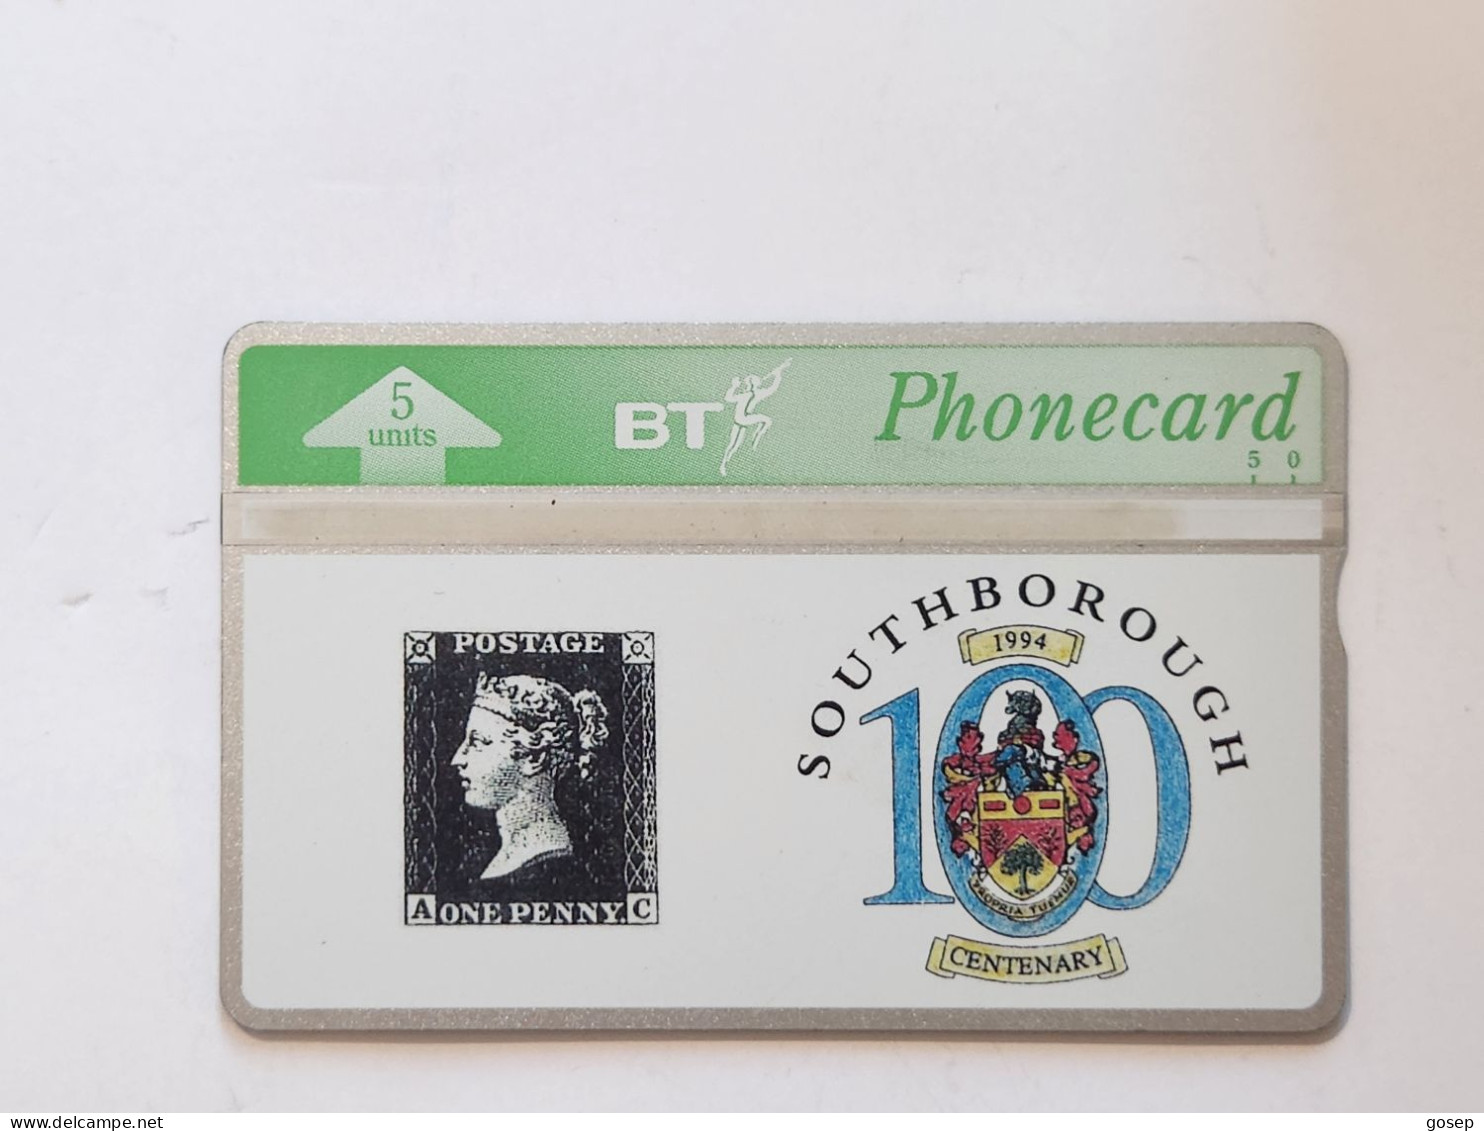 United Kingdom-(BTG-338)-Southborough Centenary-(312)(5units)(407A36978)(tirage-1.000)-price Cataloge-20.00£-mint - BT Edición General